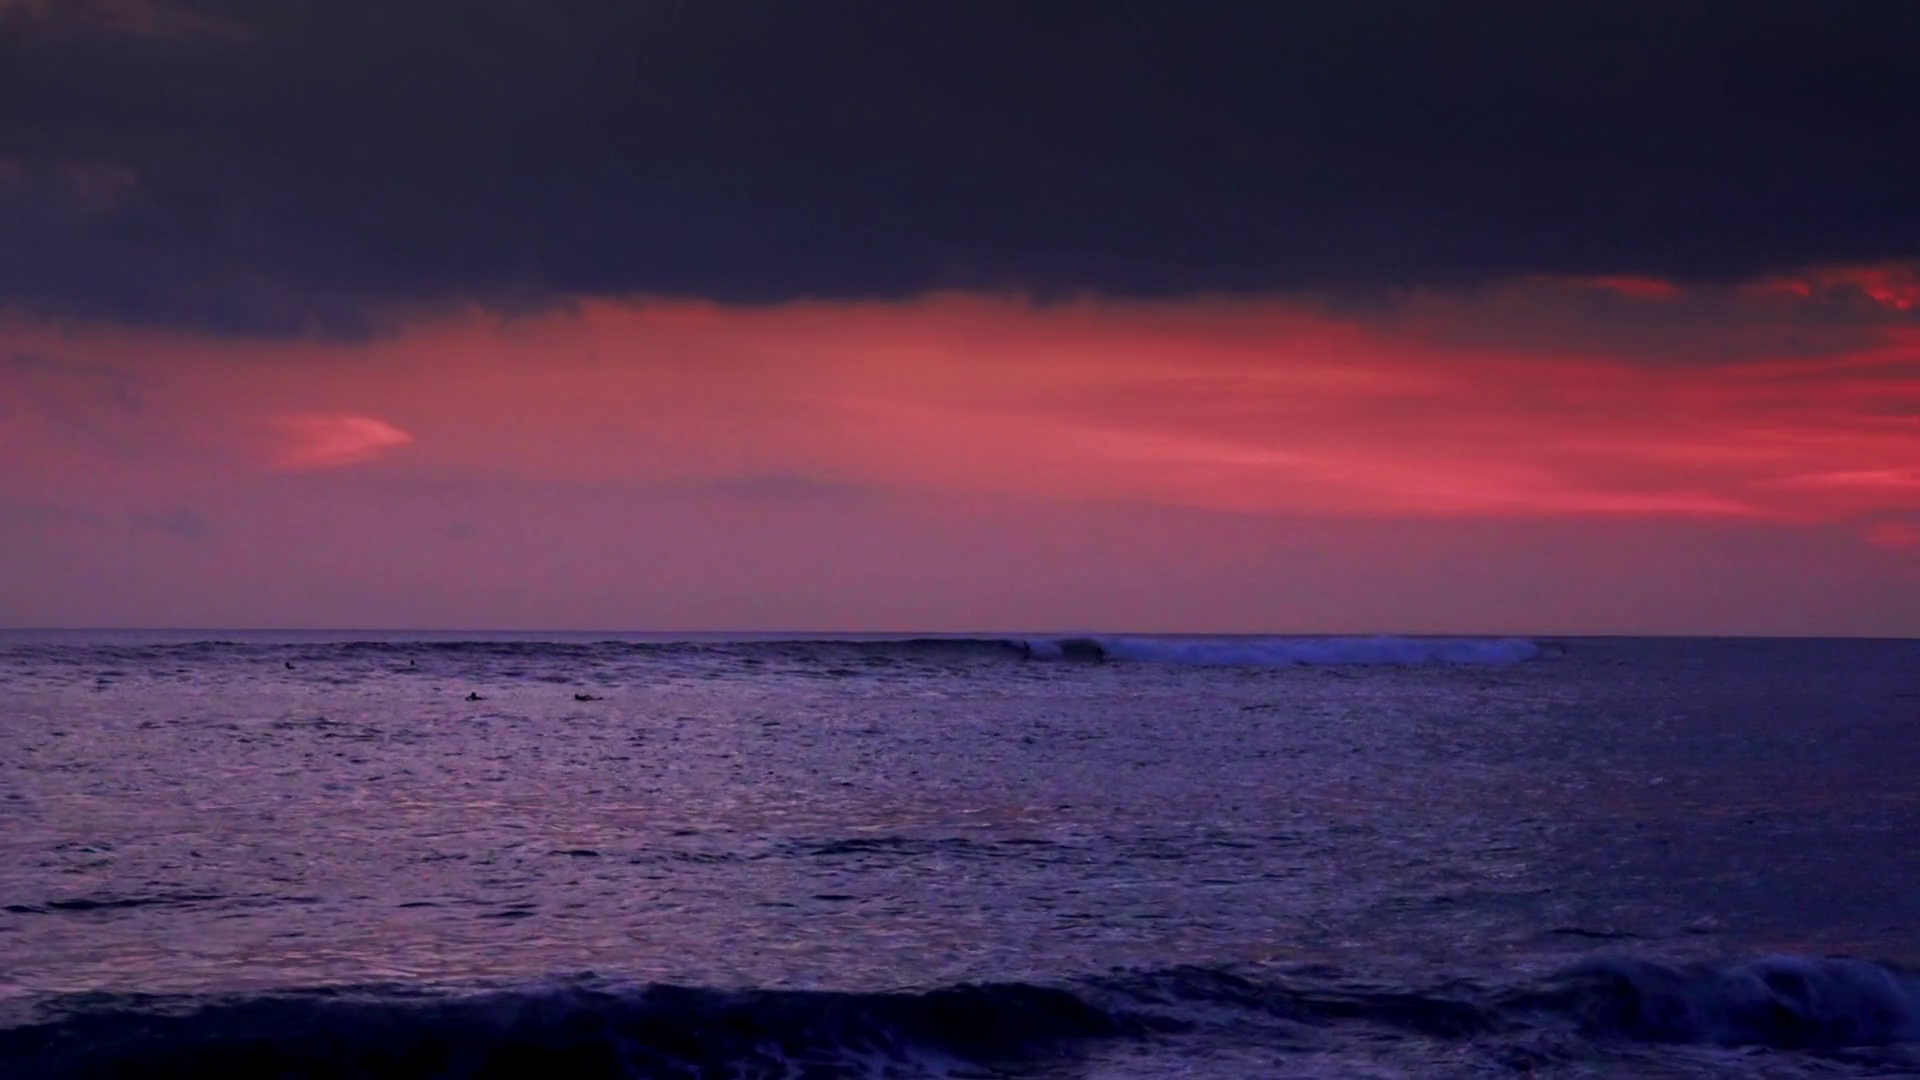 Dark night sky and rolling ocean waves breaking on shore in twilight ...